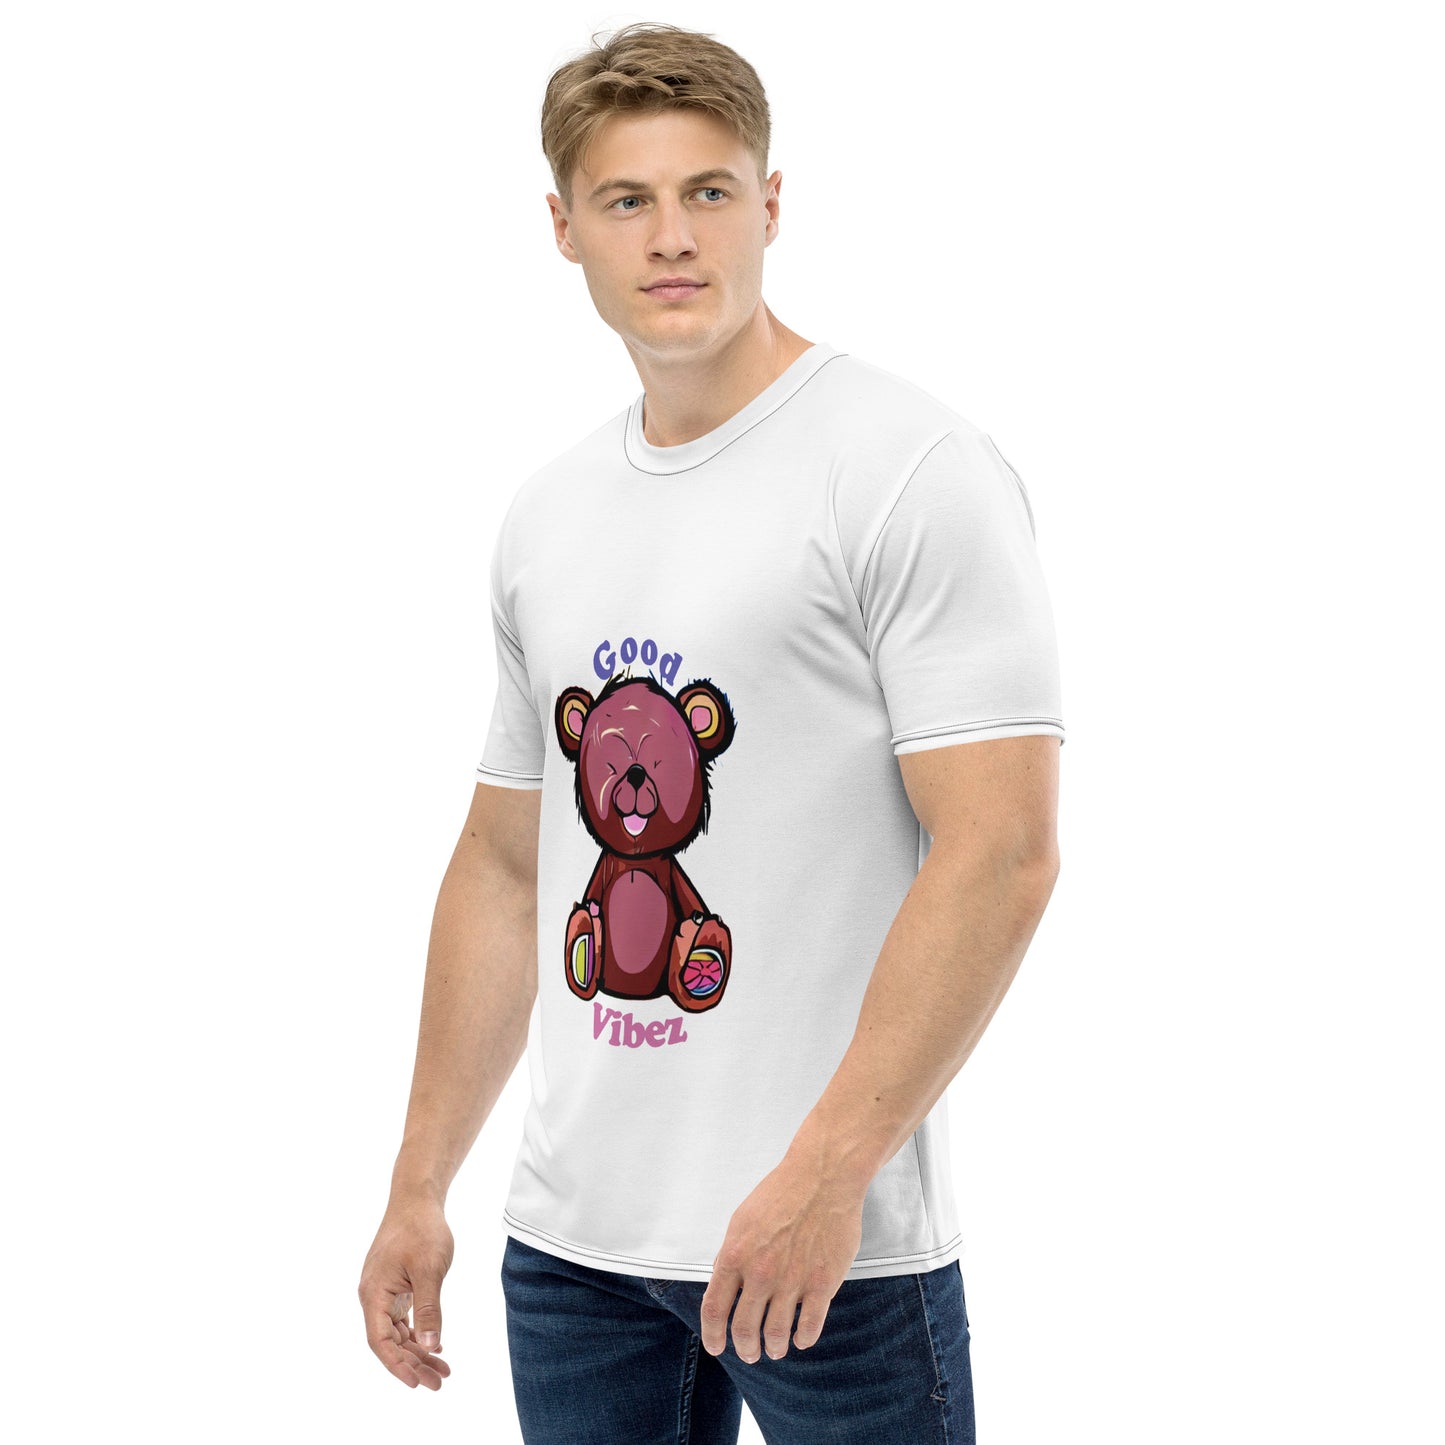 Good Vibez "Knqv" | Men's t-shirt